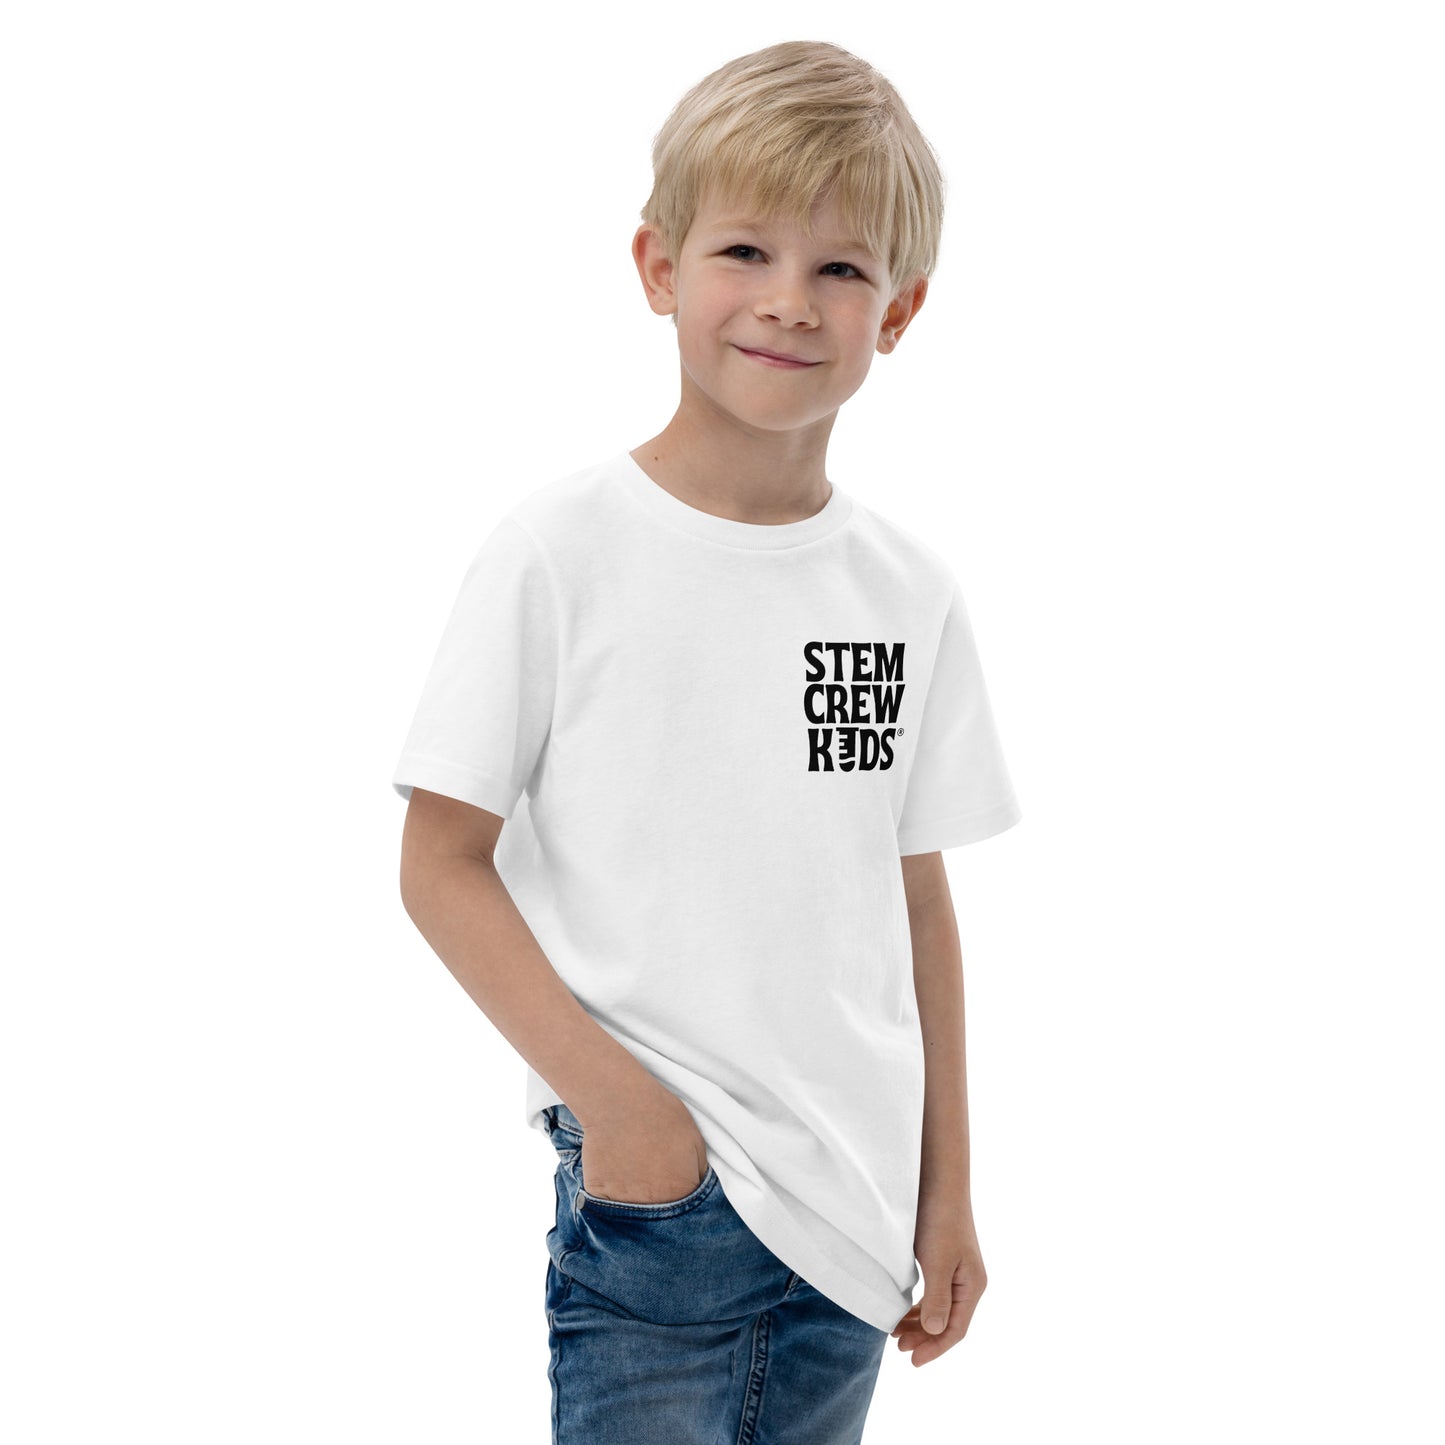 STEM Crew Kids Youth t-shirt pocket (Black/White)